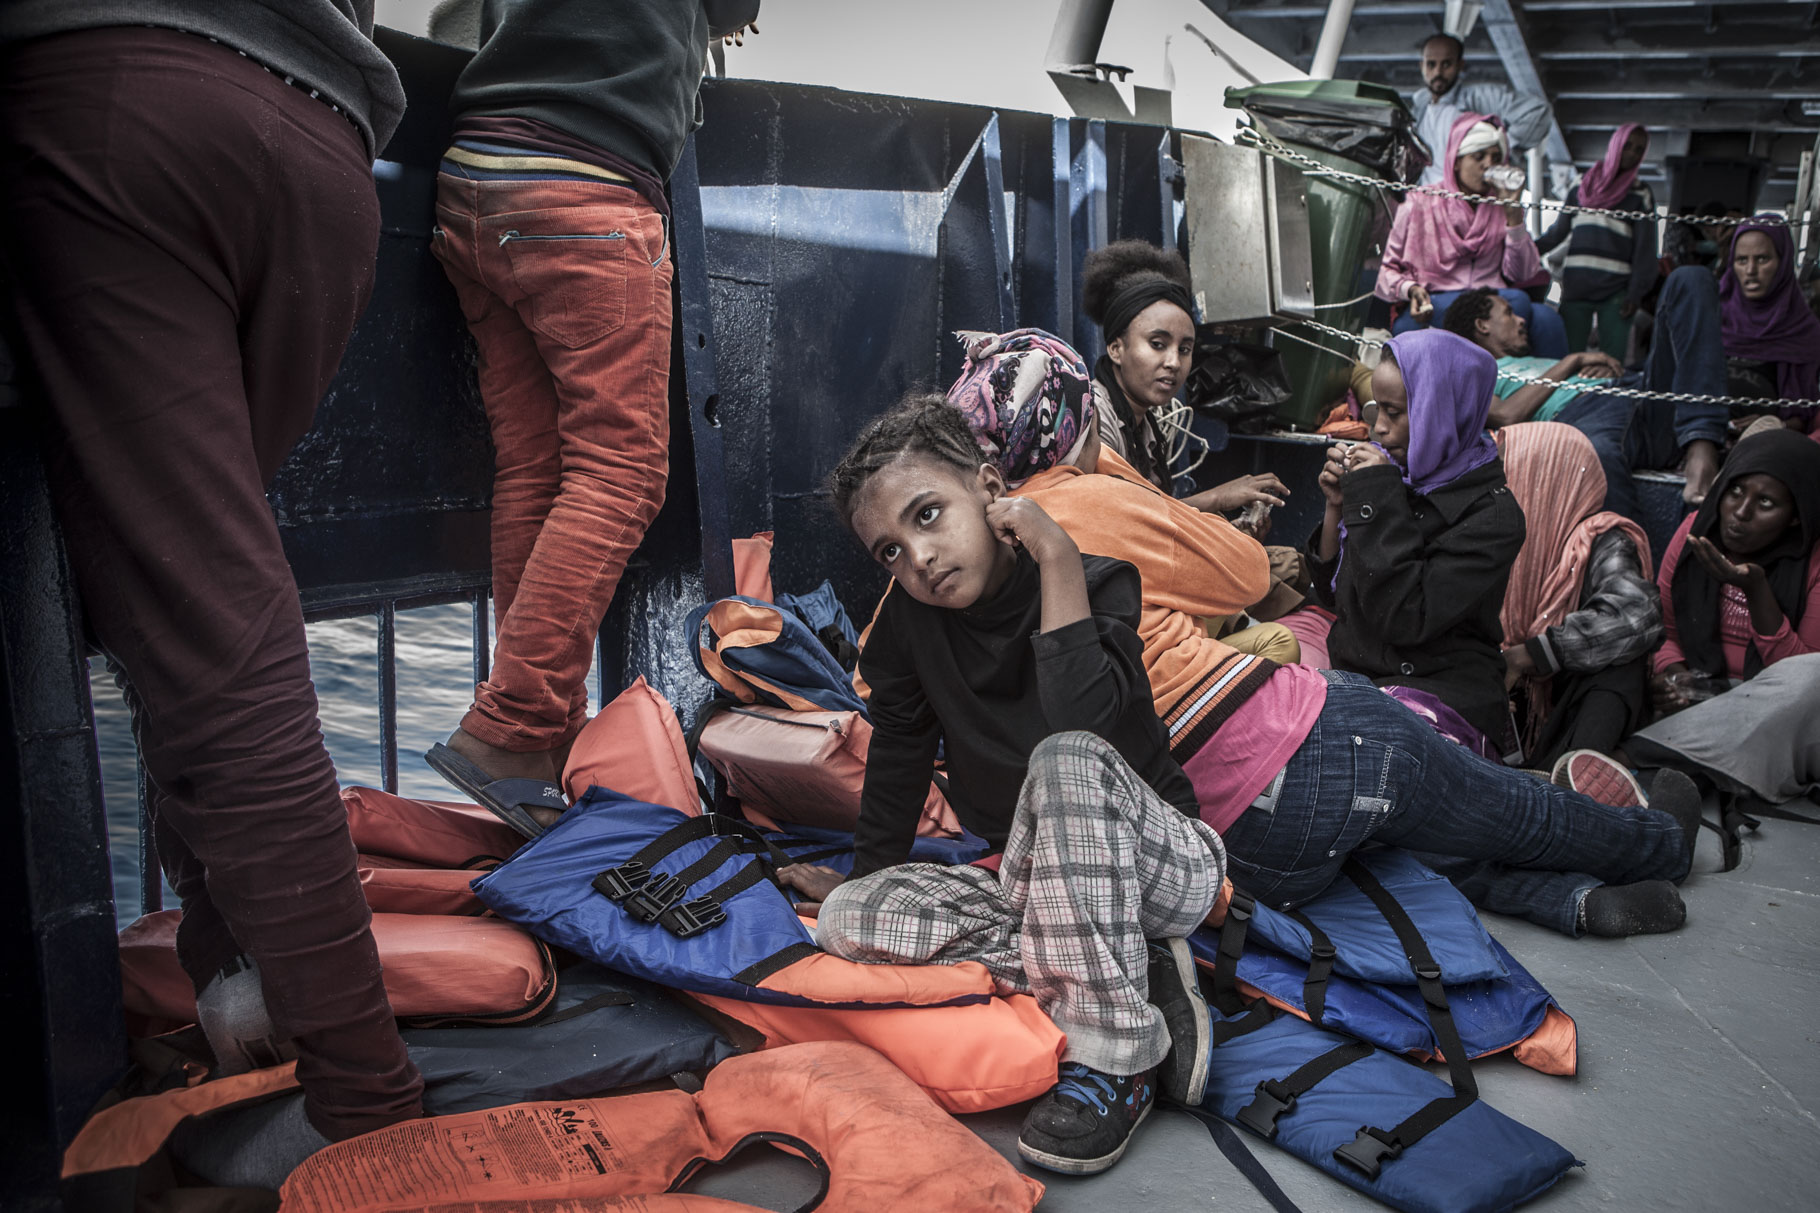 Migrant rescues in the Mediterranean 